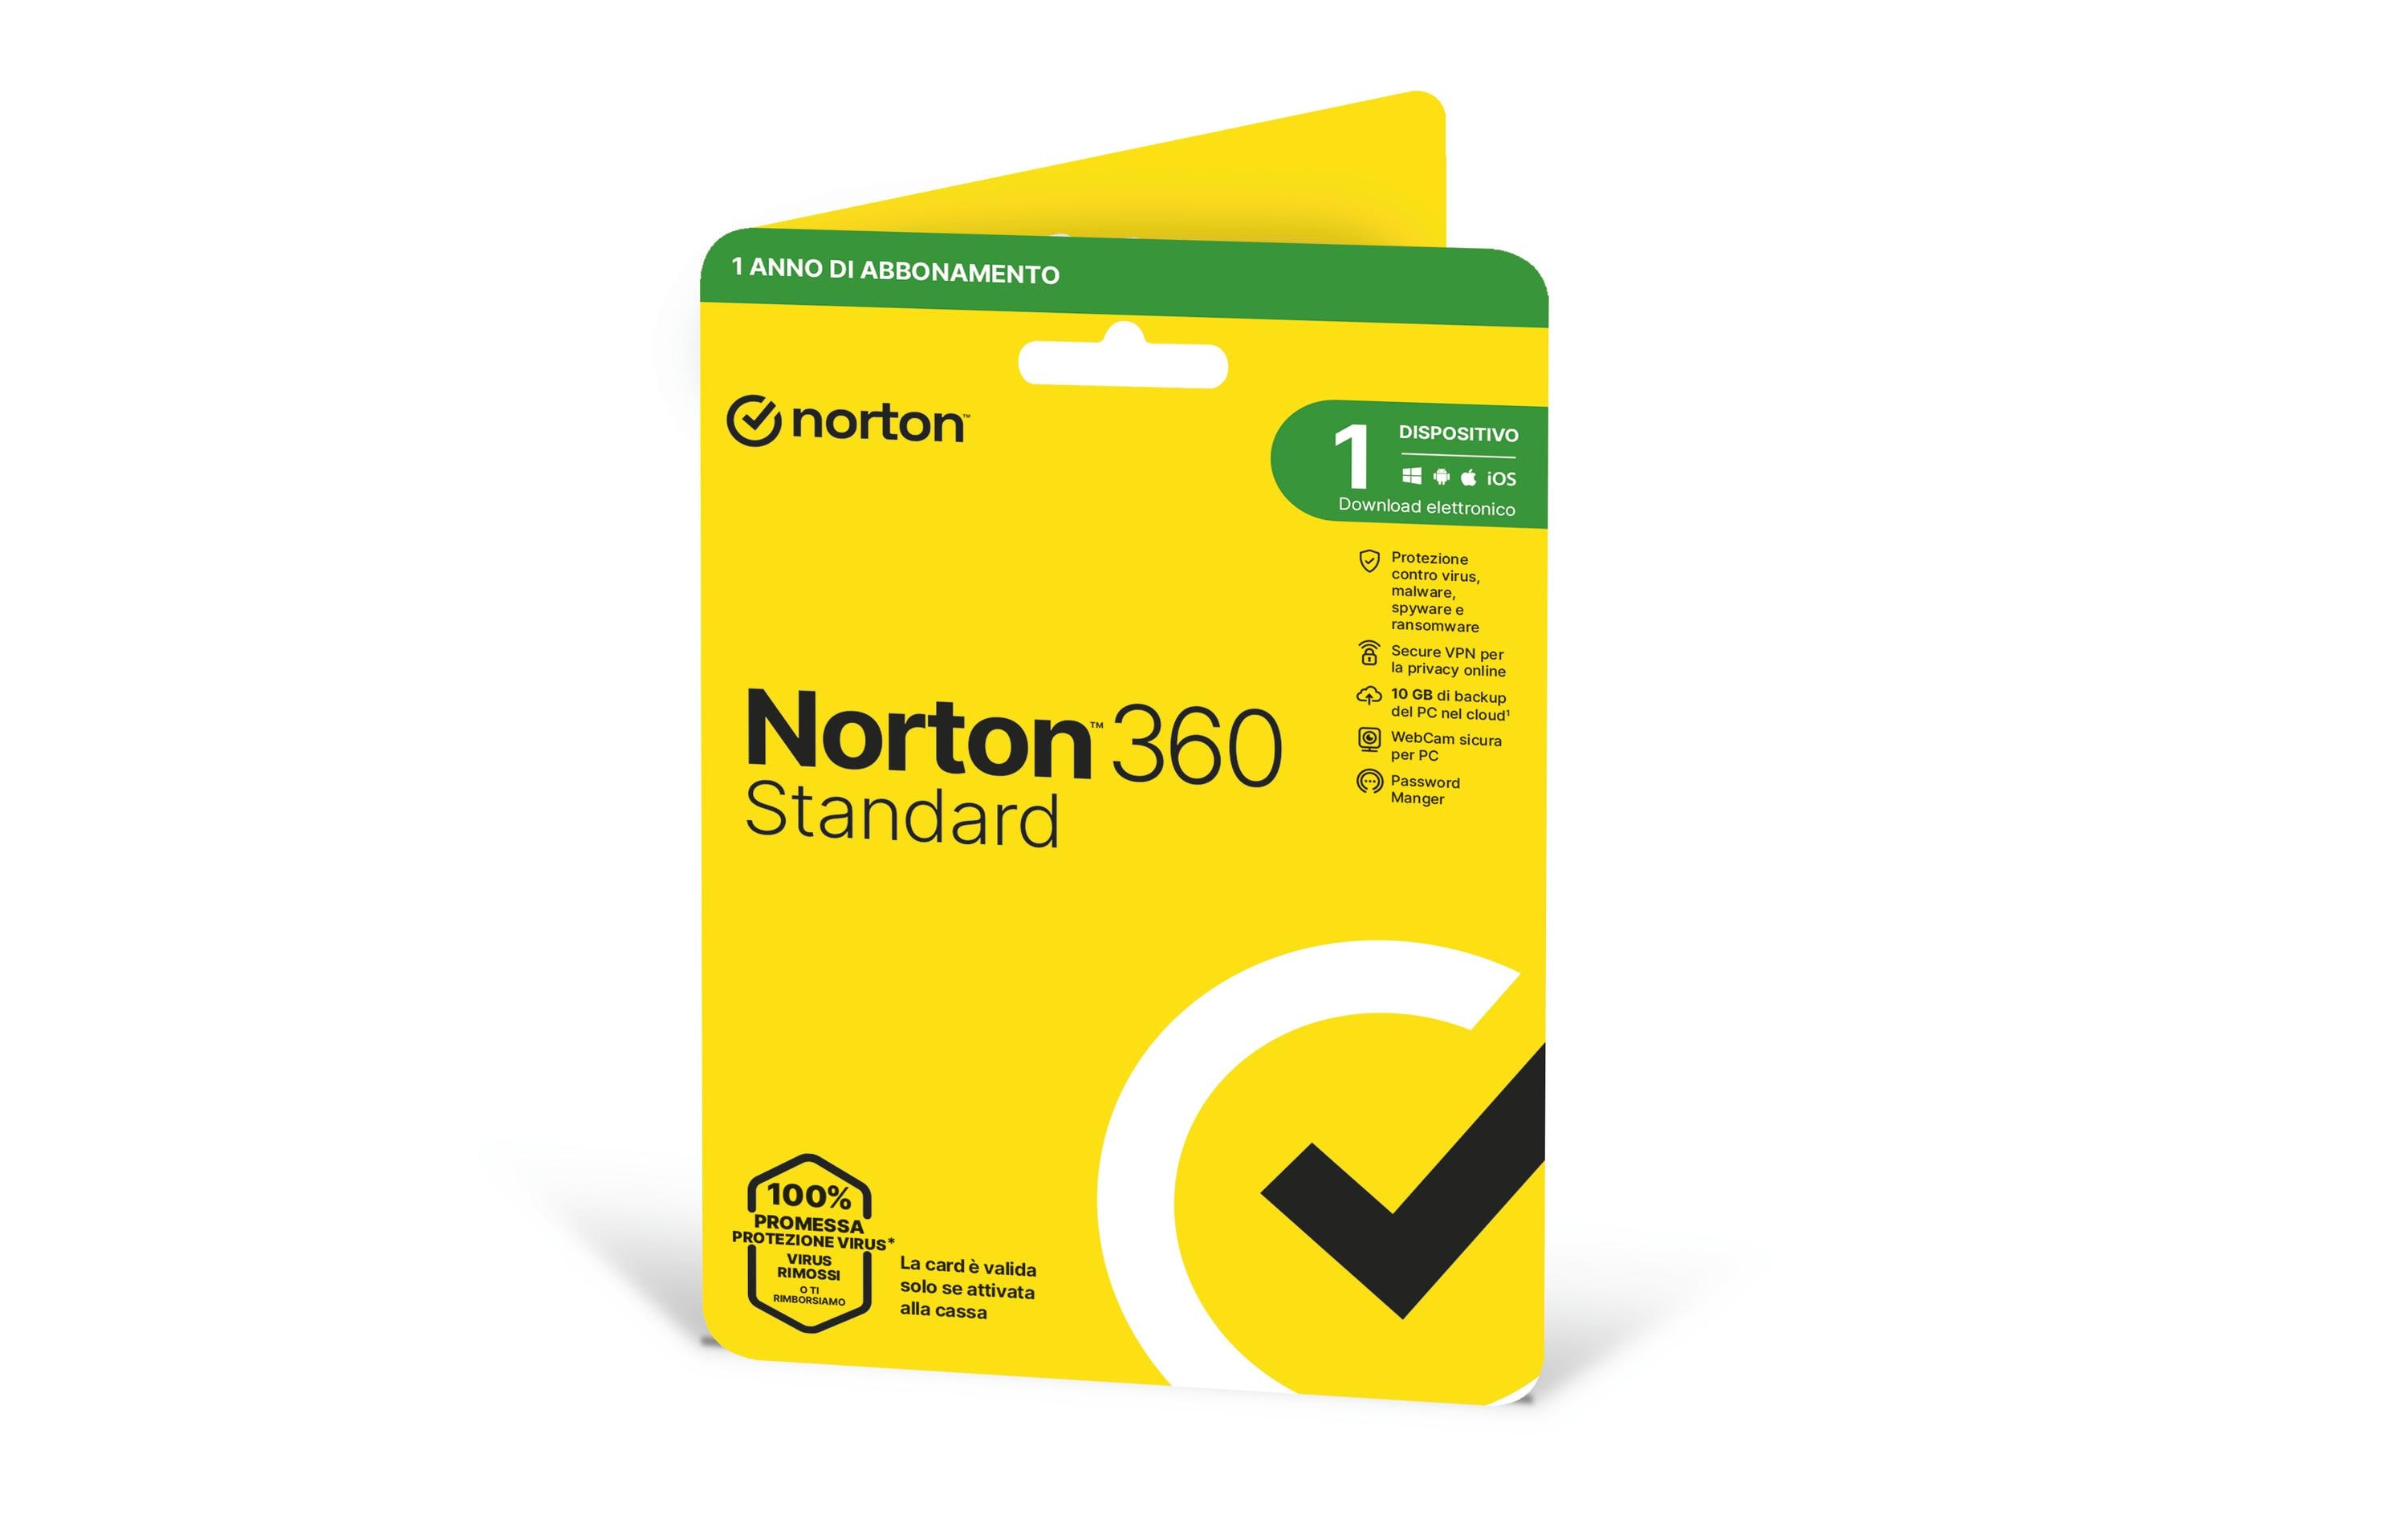 Norton Norton 360 Standard Sleeve, 1 Dev., 1yr, 10GB Cloud Speicher